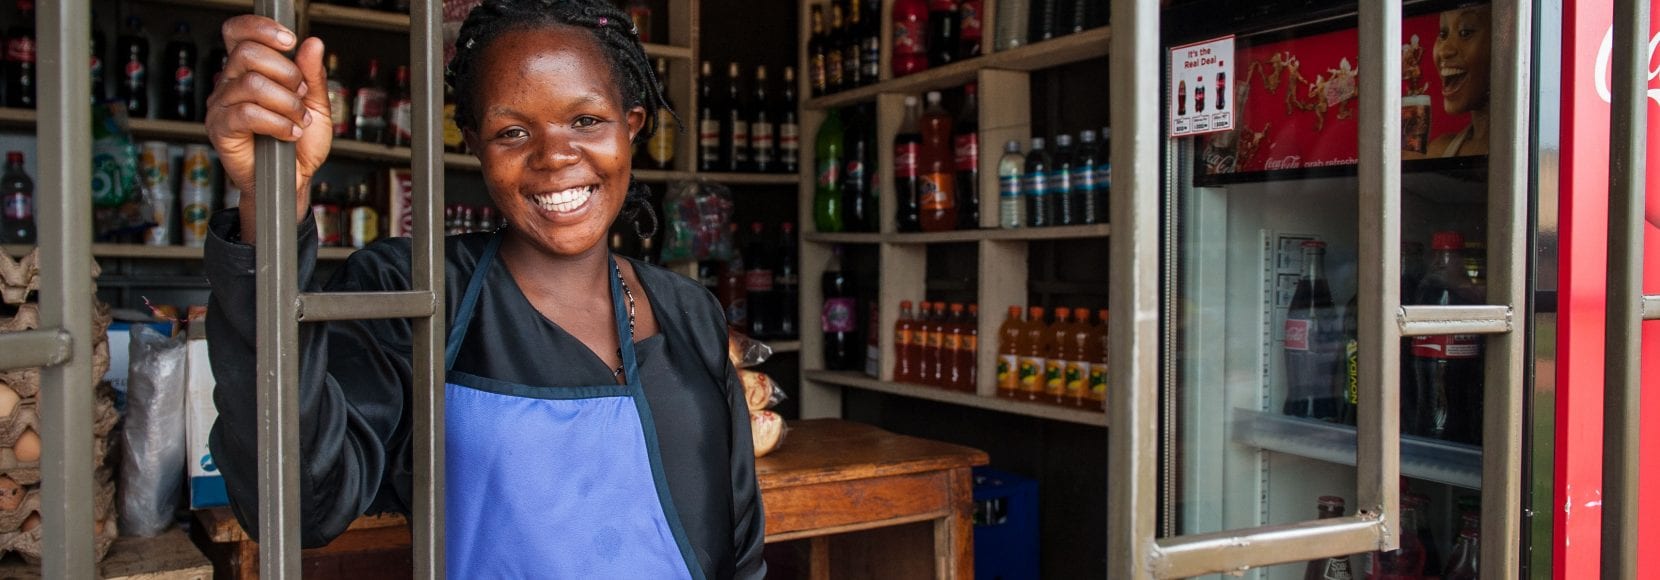 Woman smiling in her store in Uganda